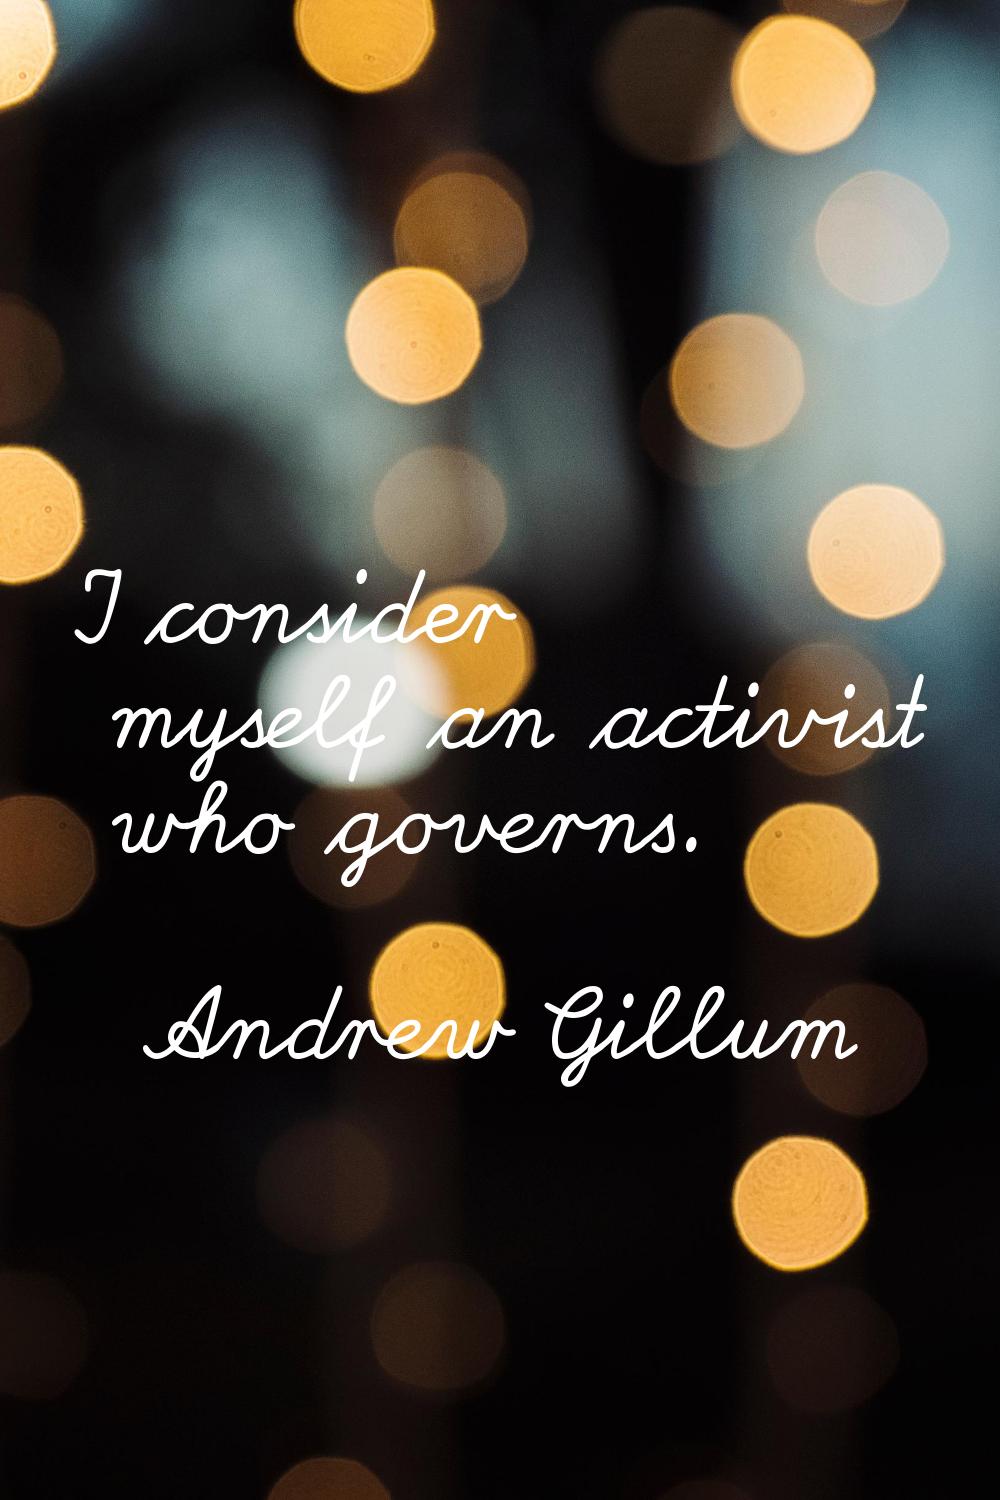 I consider myself an activist who governs.